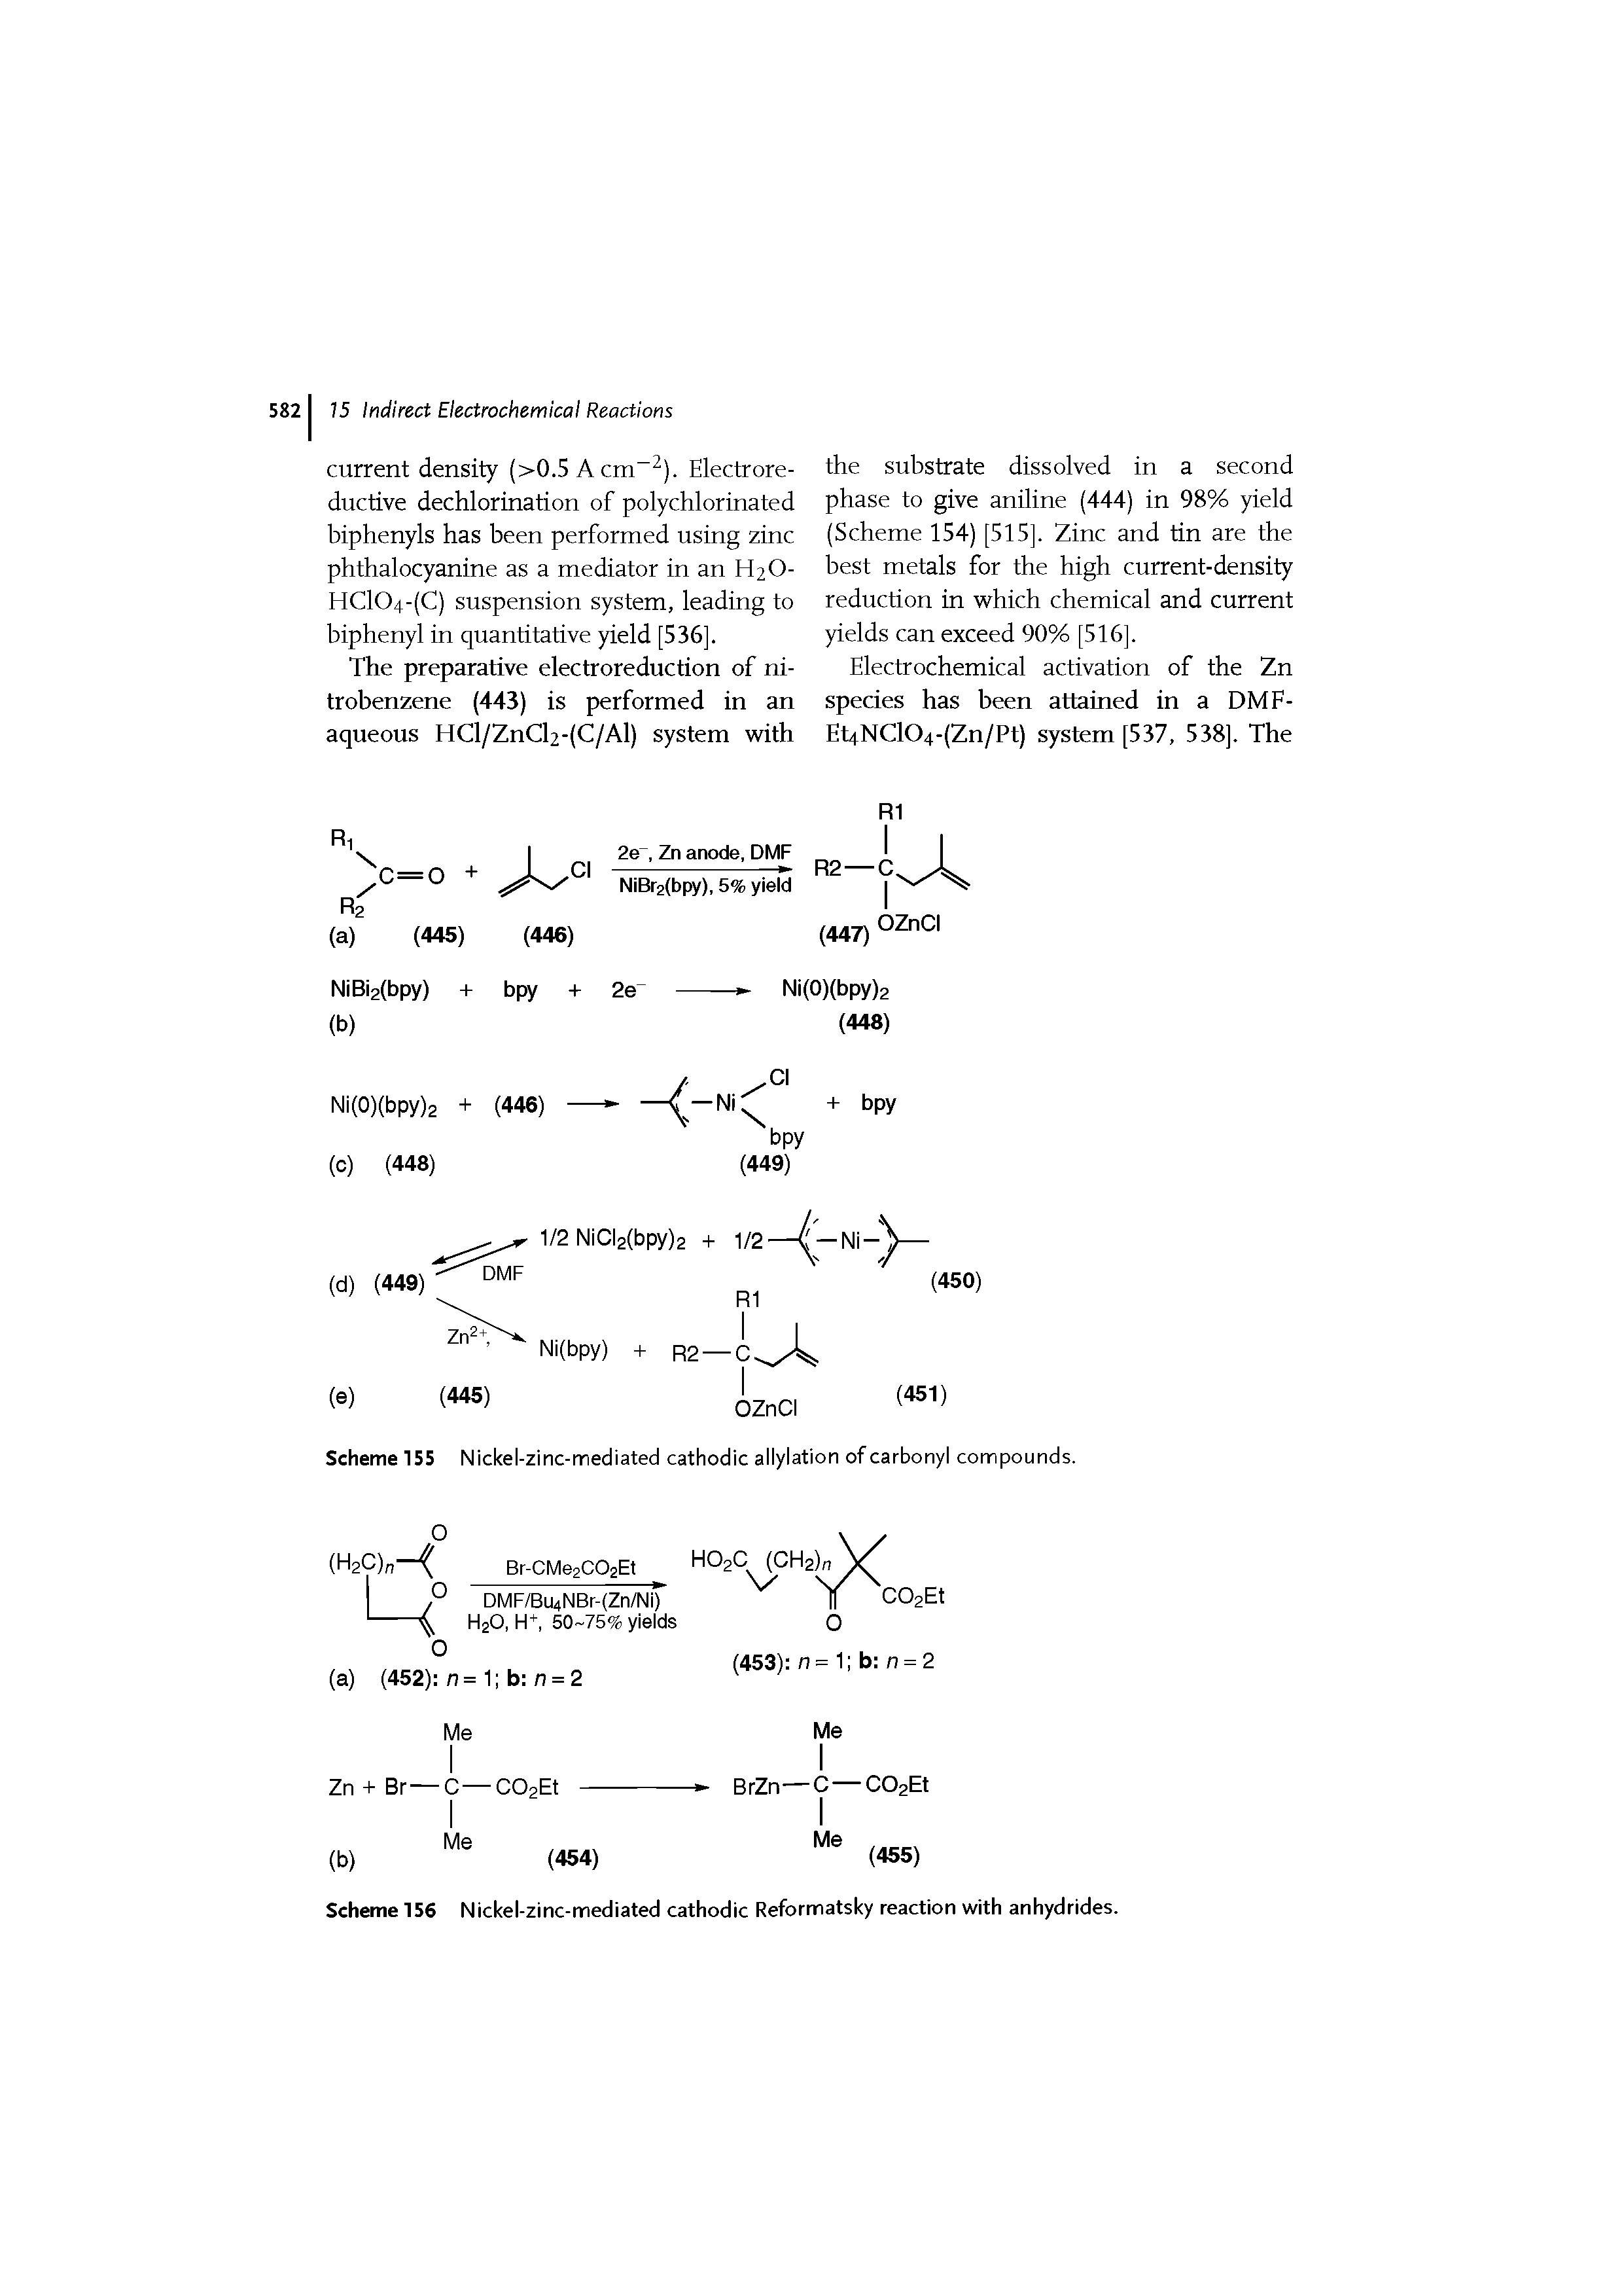 Scheme 156 Nickel-zinc-mediated cathodic Reformatsky reaction with anhydrides.